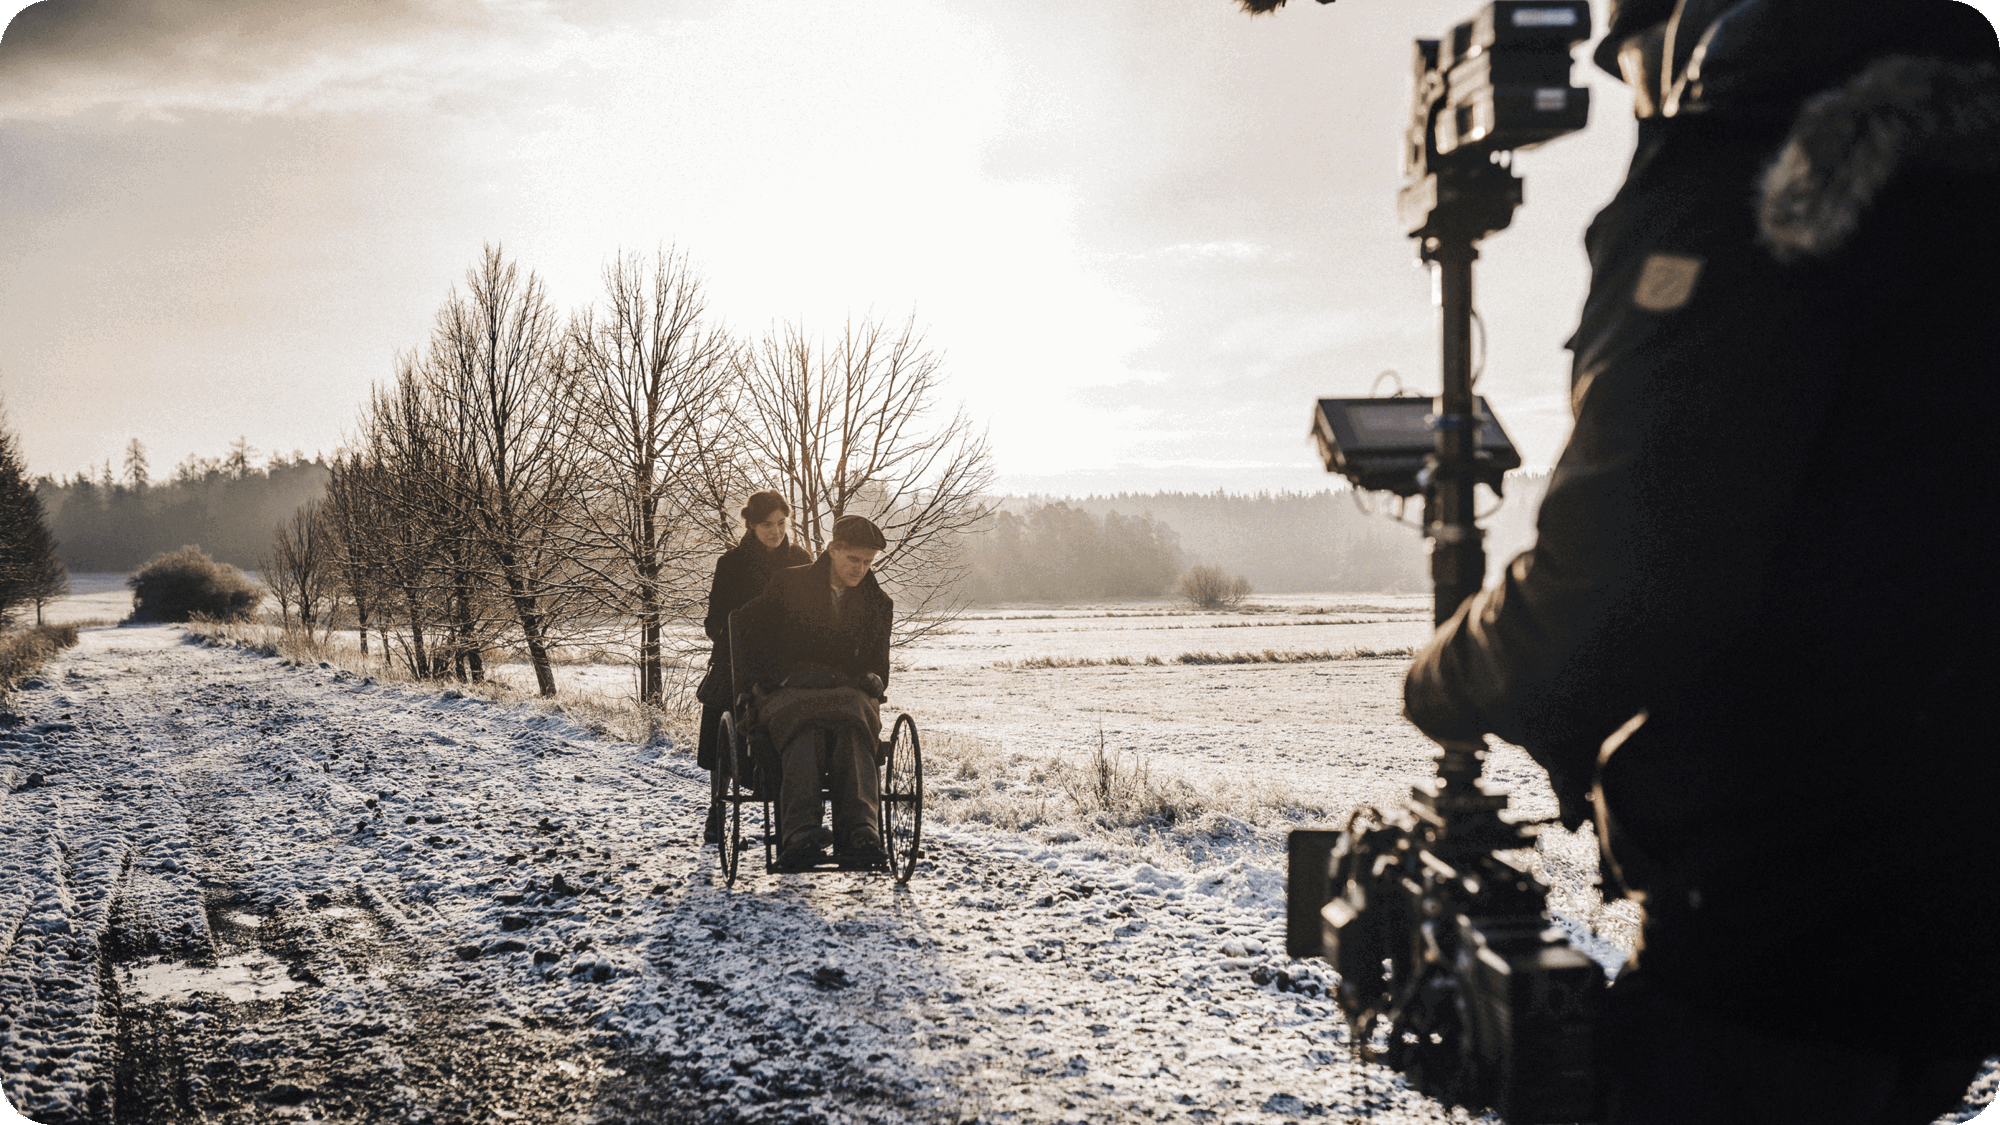 Image cfc-winter-film-scene-photo.png